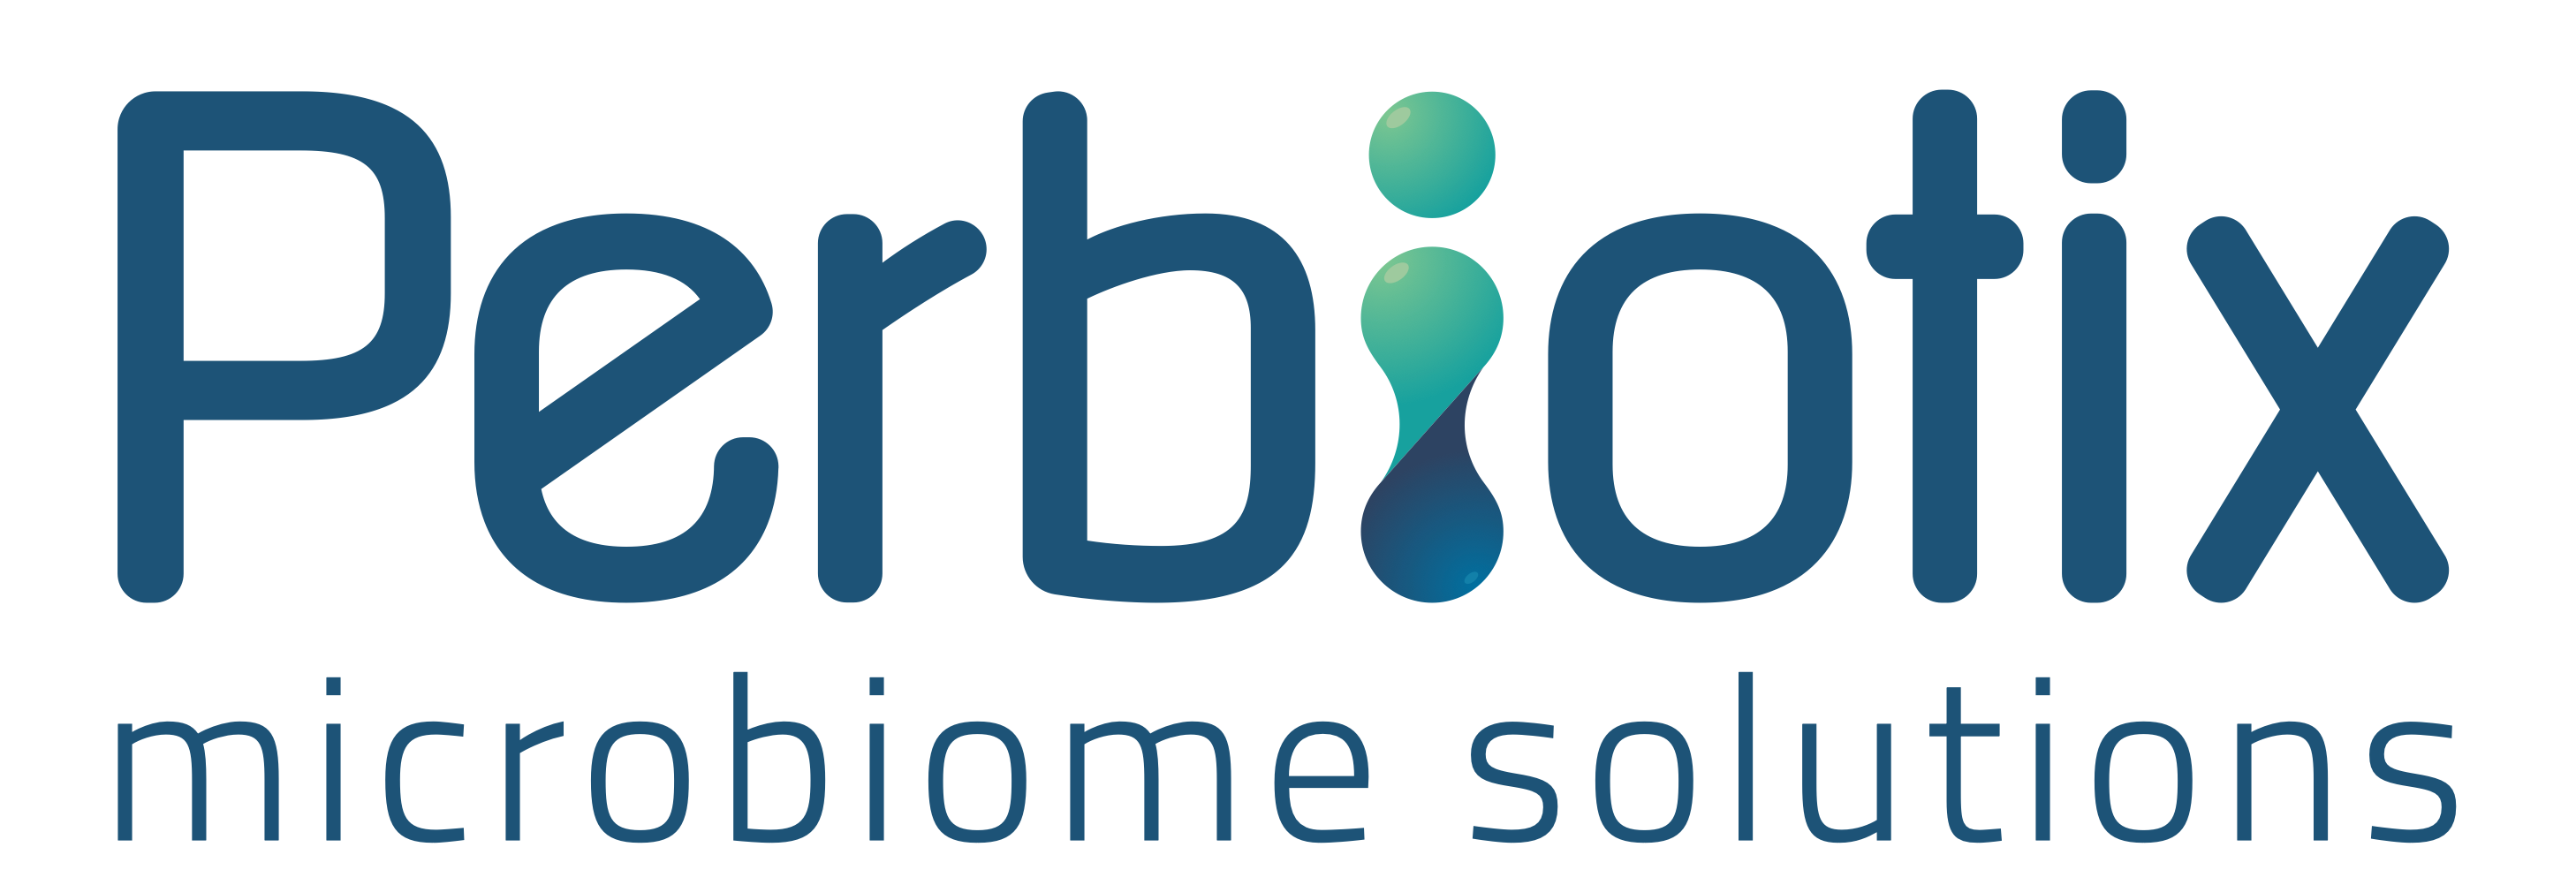 Perbiotix microbiome solutions